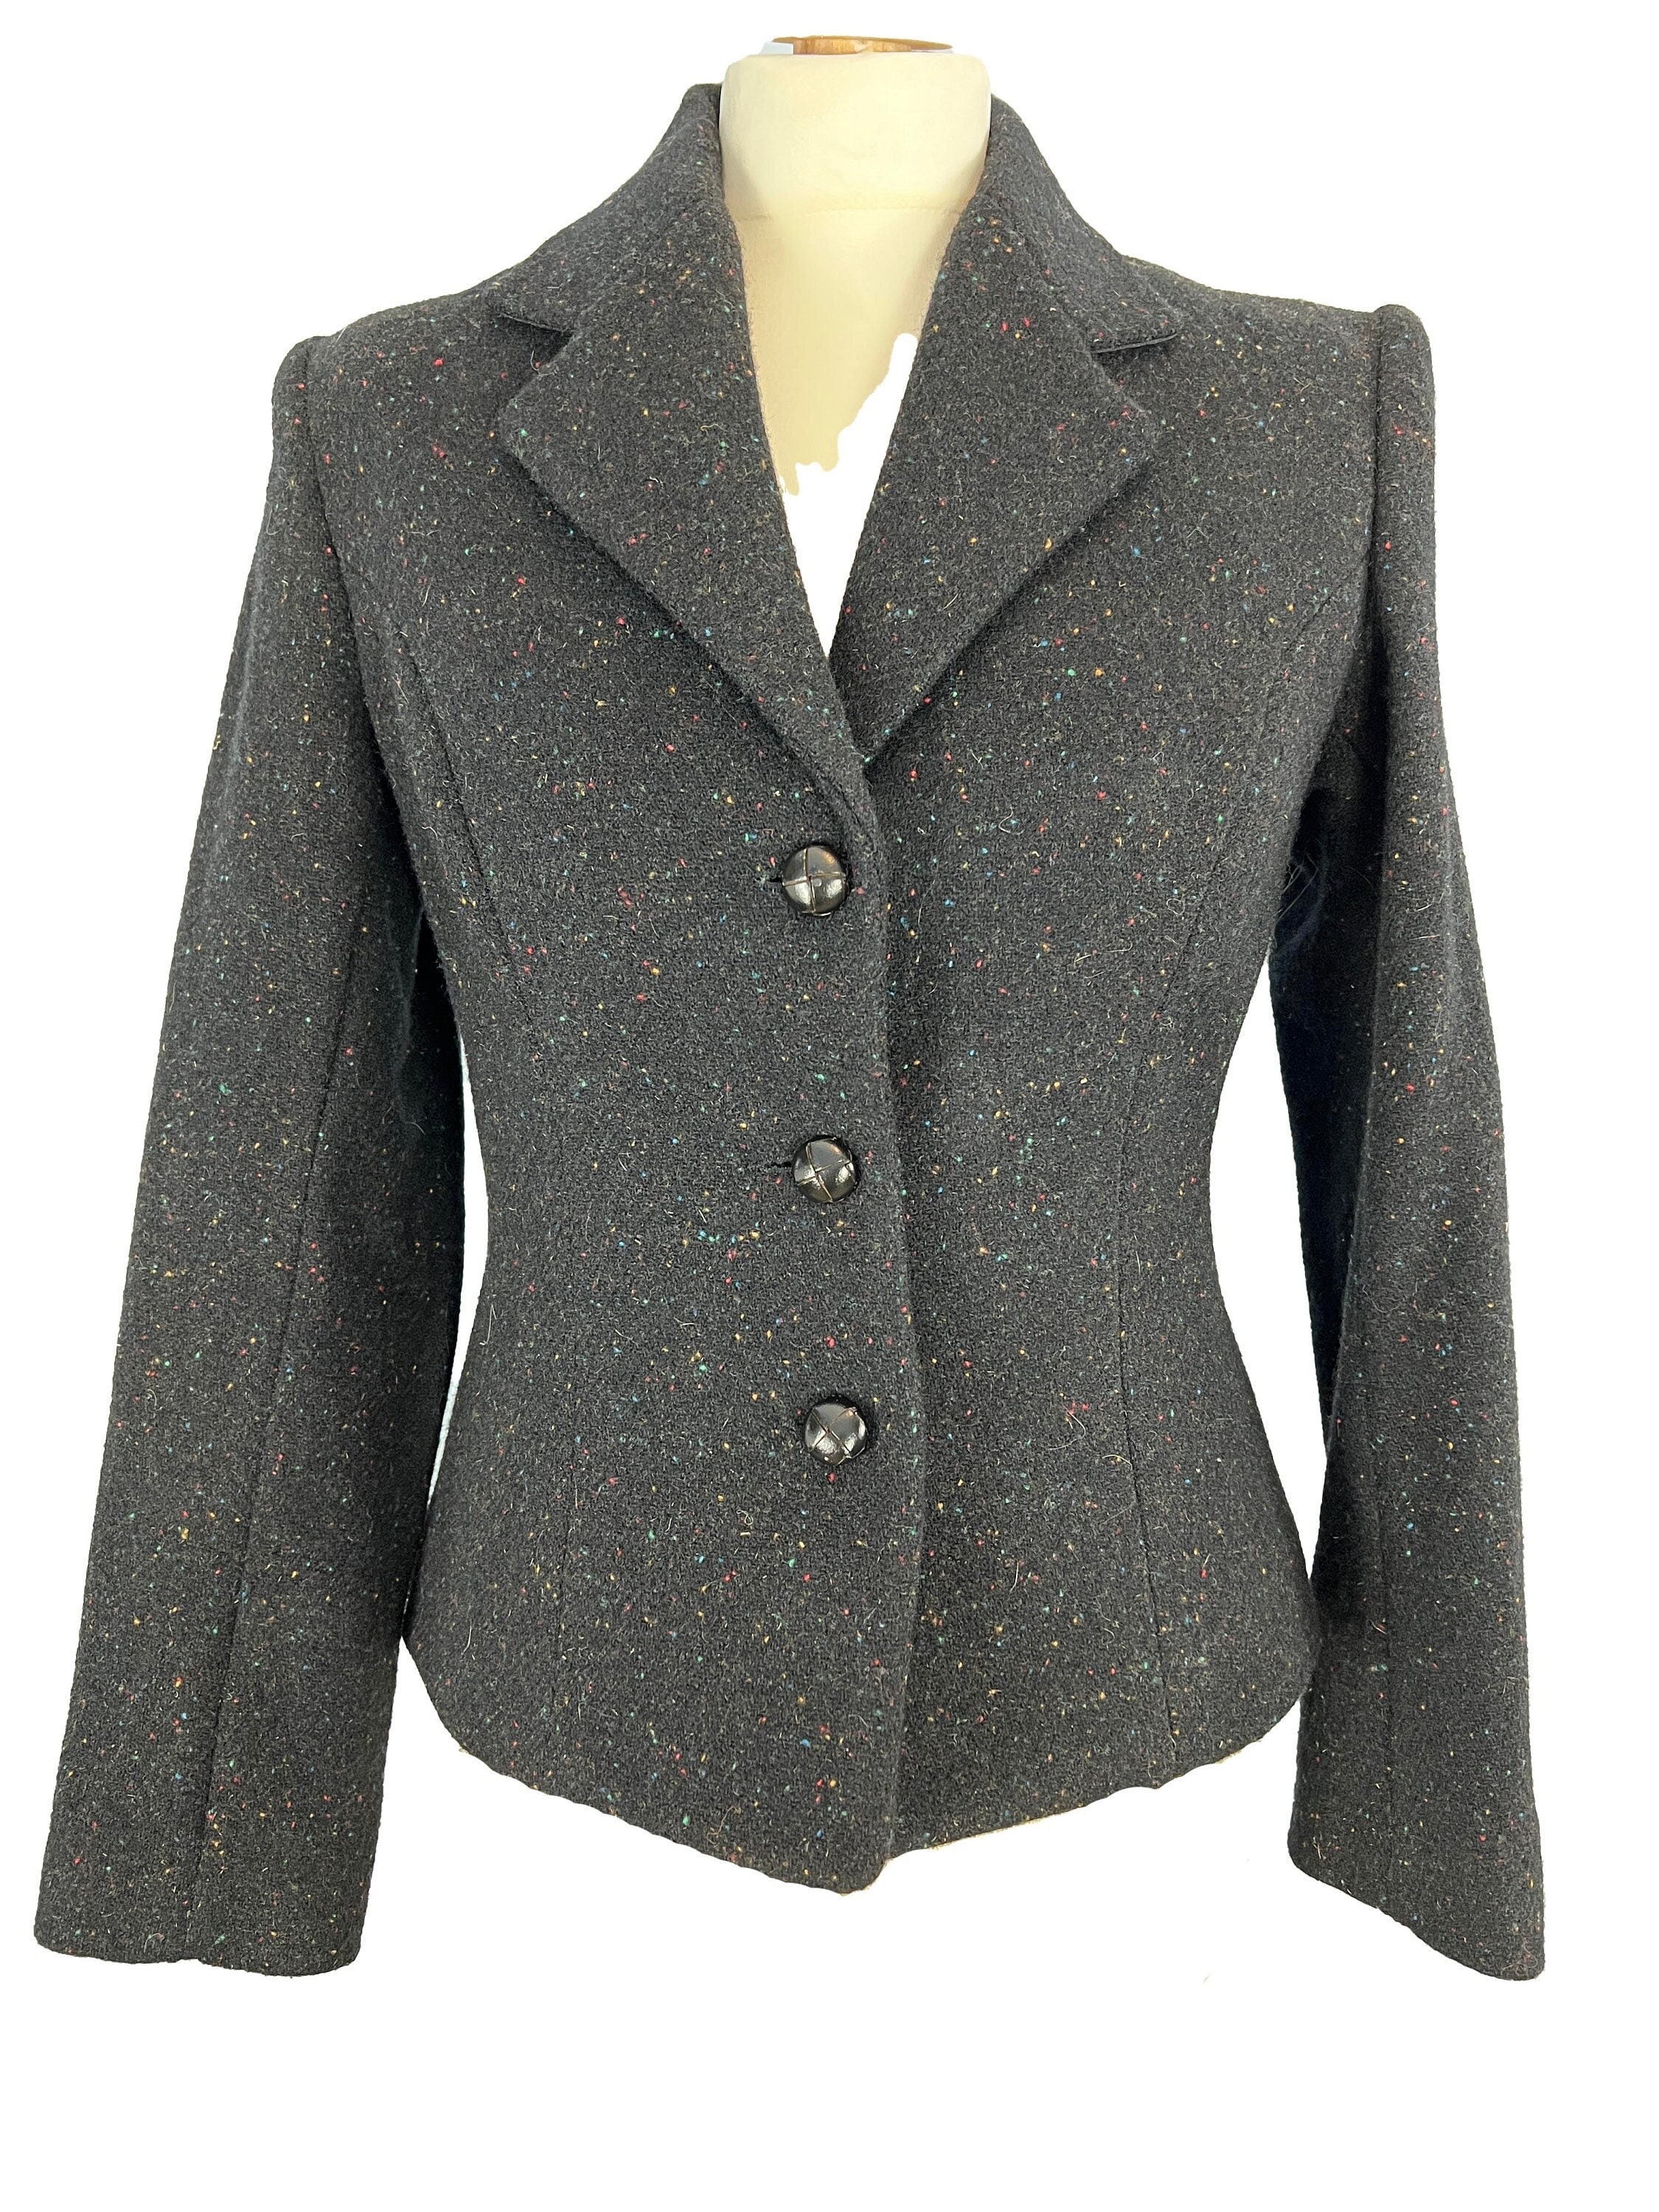 Glenalmond Tweed Company Jacket Hand Made With Grey Harris Tweed Wool ...